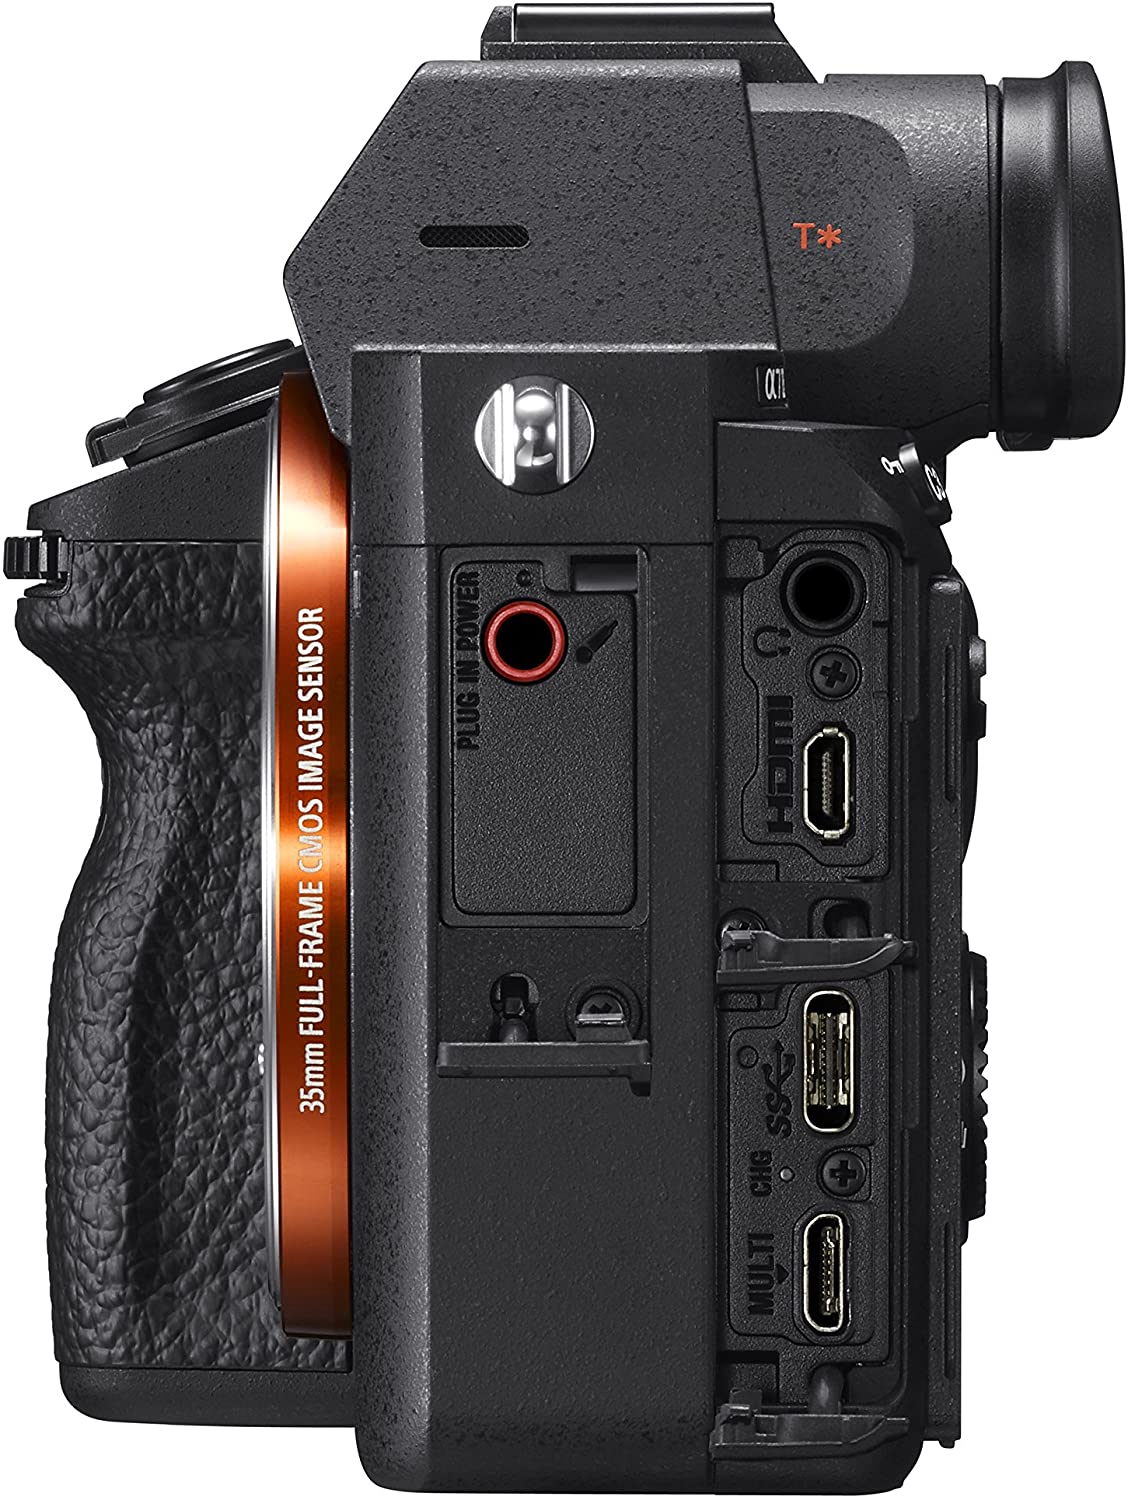 Sony Alpha a7 III Camera Body